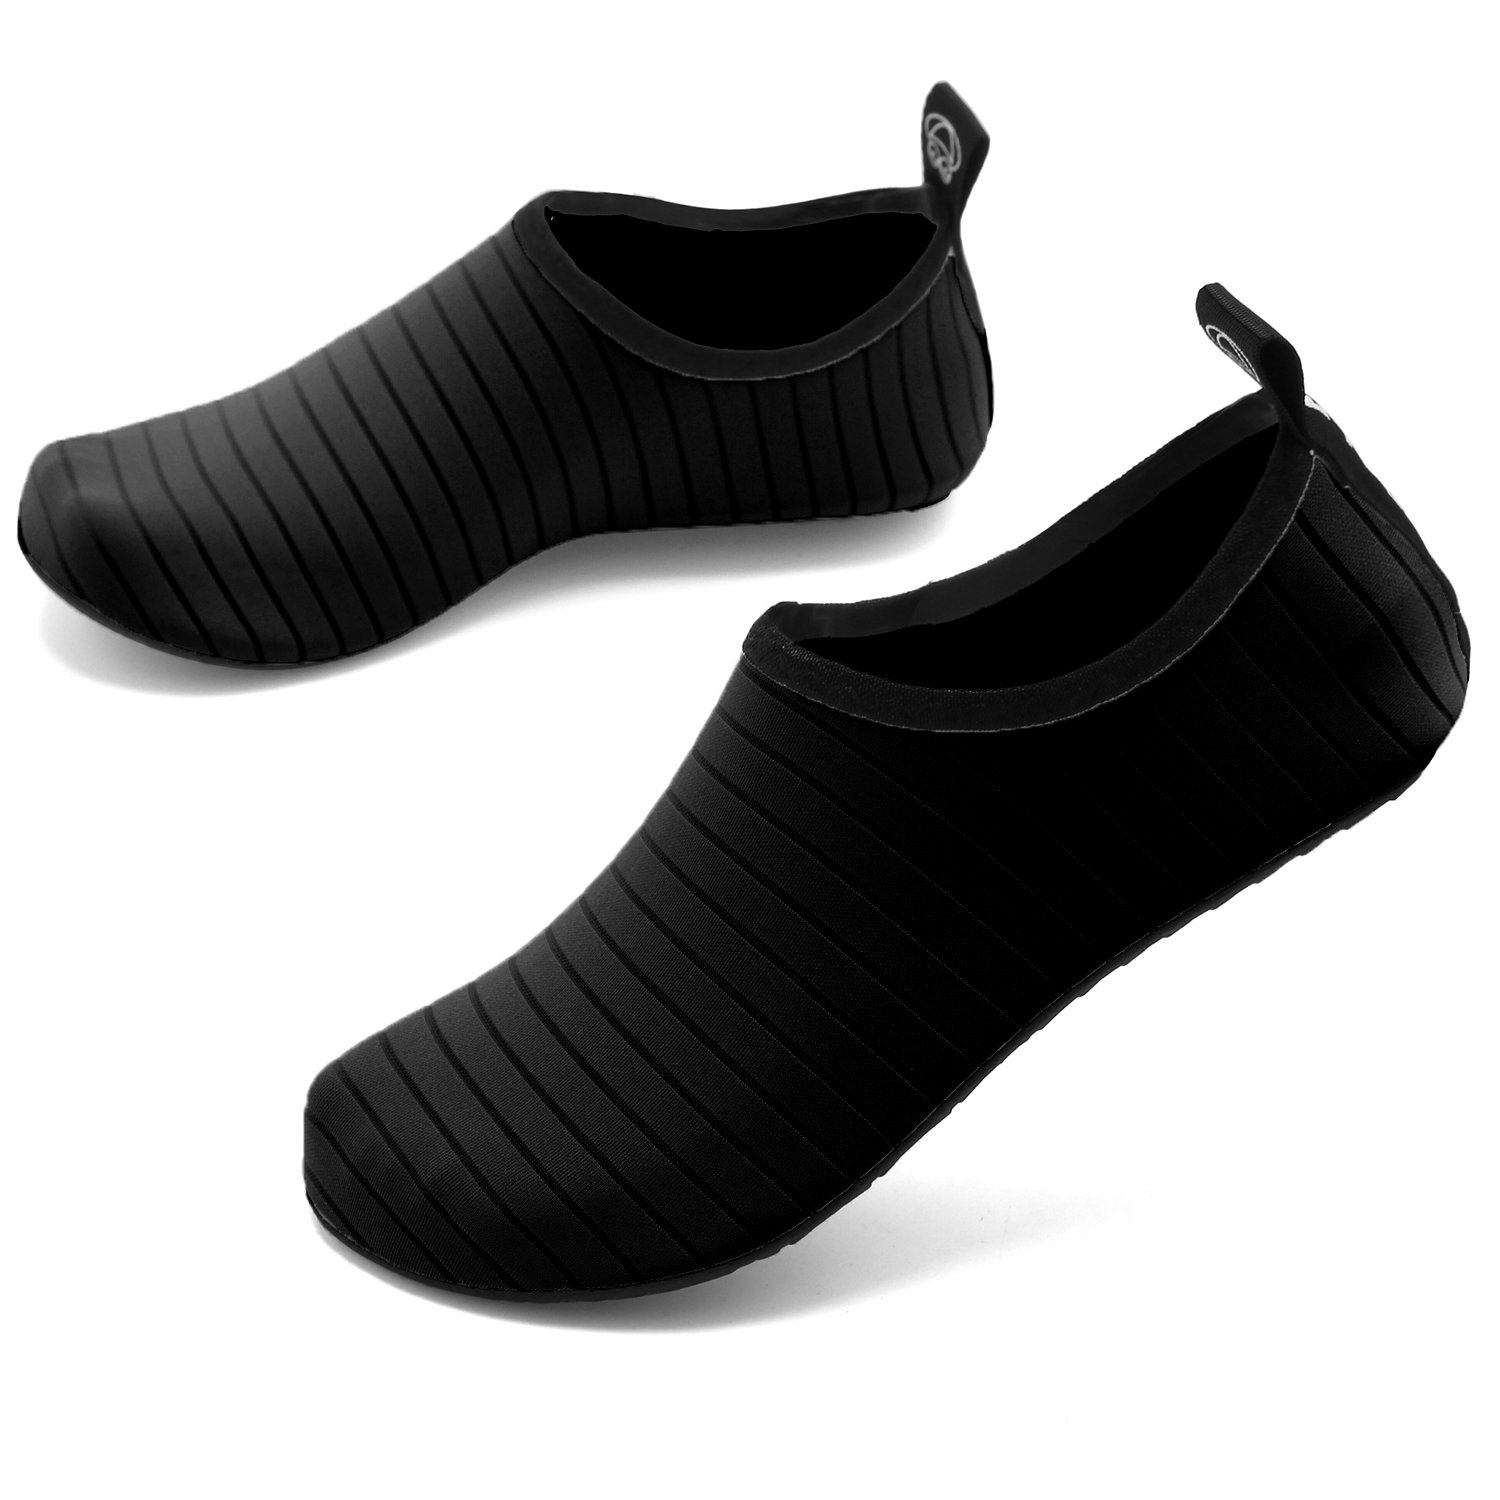 VIFUUR Water Sports Shoes Barefoot Quick-Dry Aqua Yoga Socks, Black ...